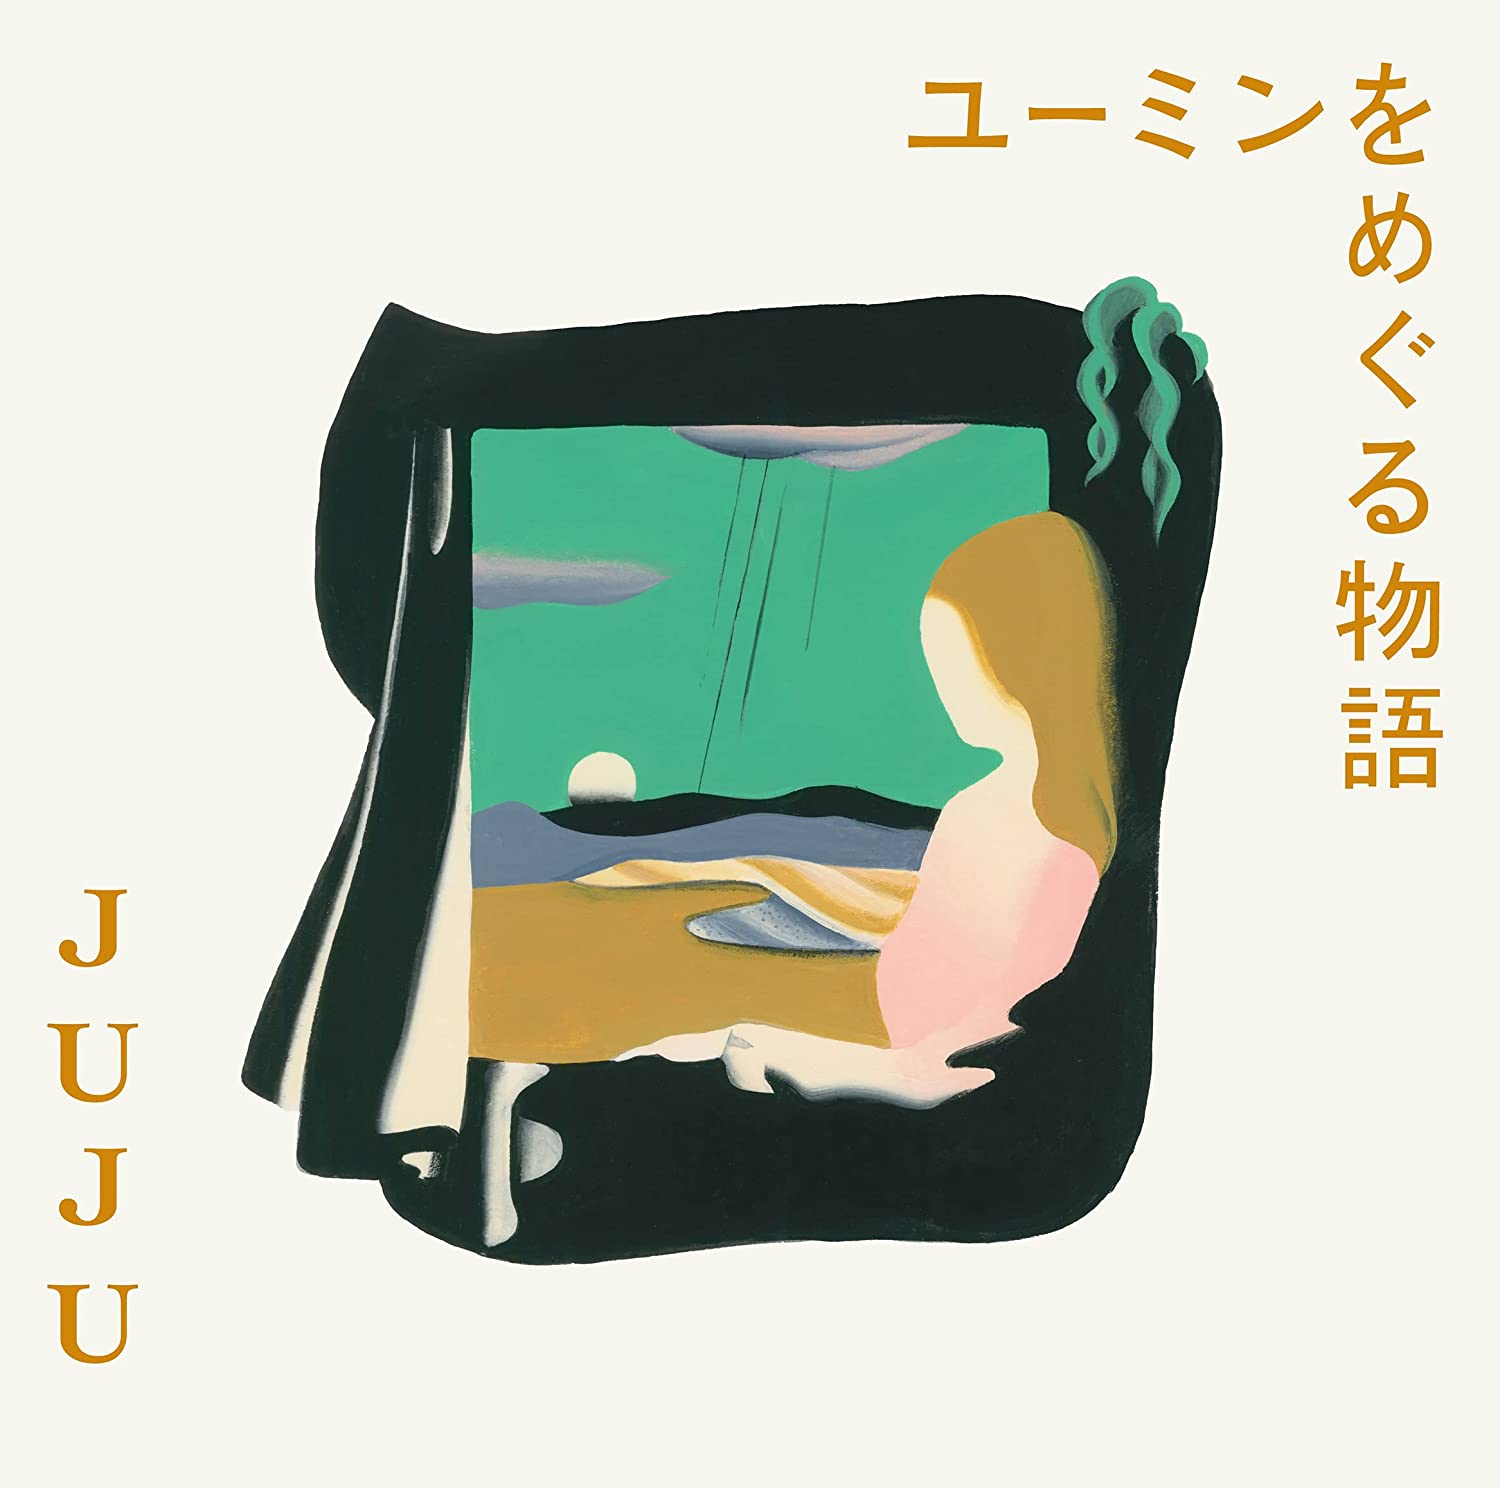 JUJU／ユーミンをめぐる物語 (通常盤) (CD) AICL-4203 2022/3/16発売